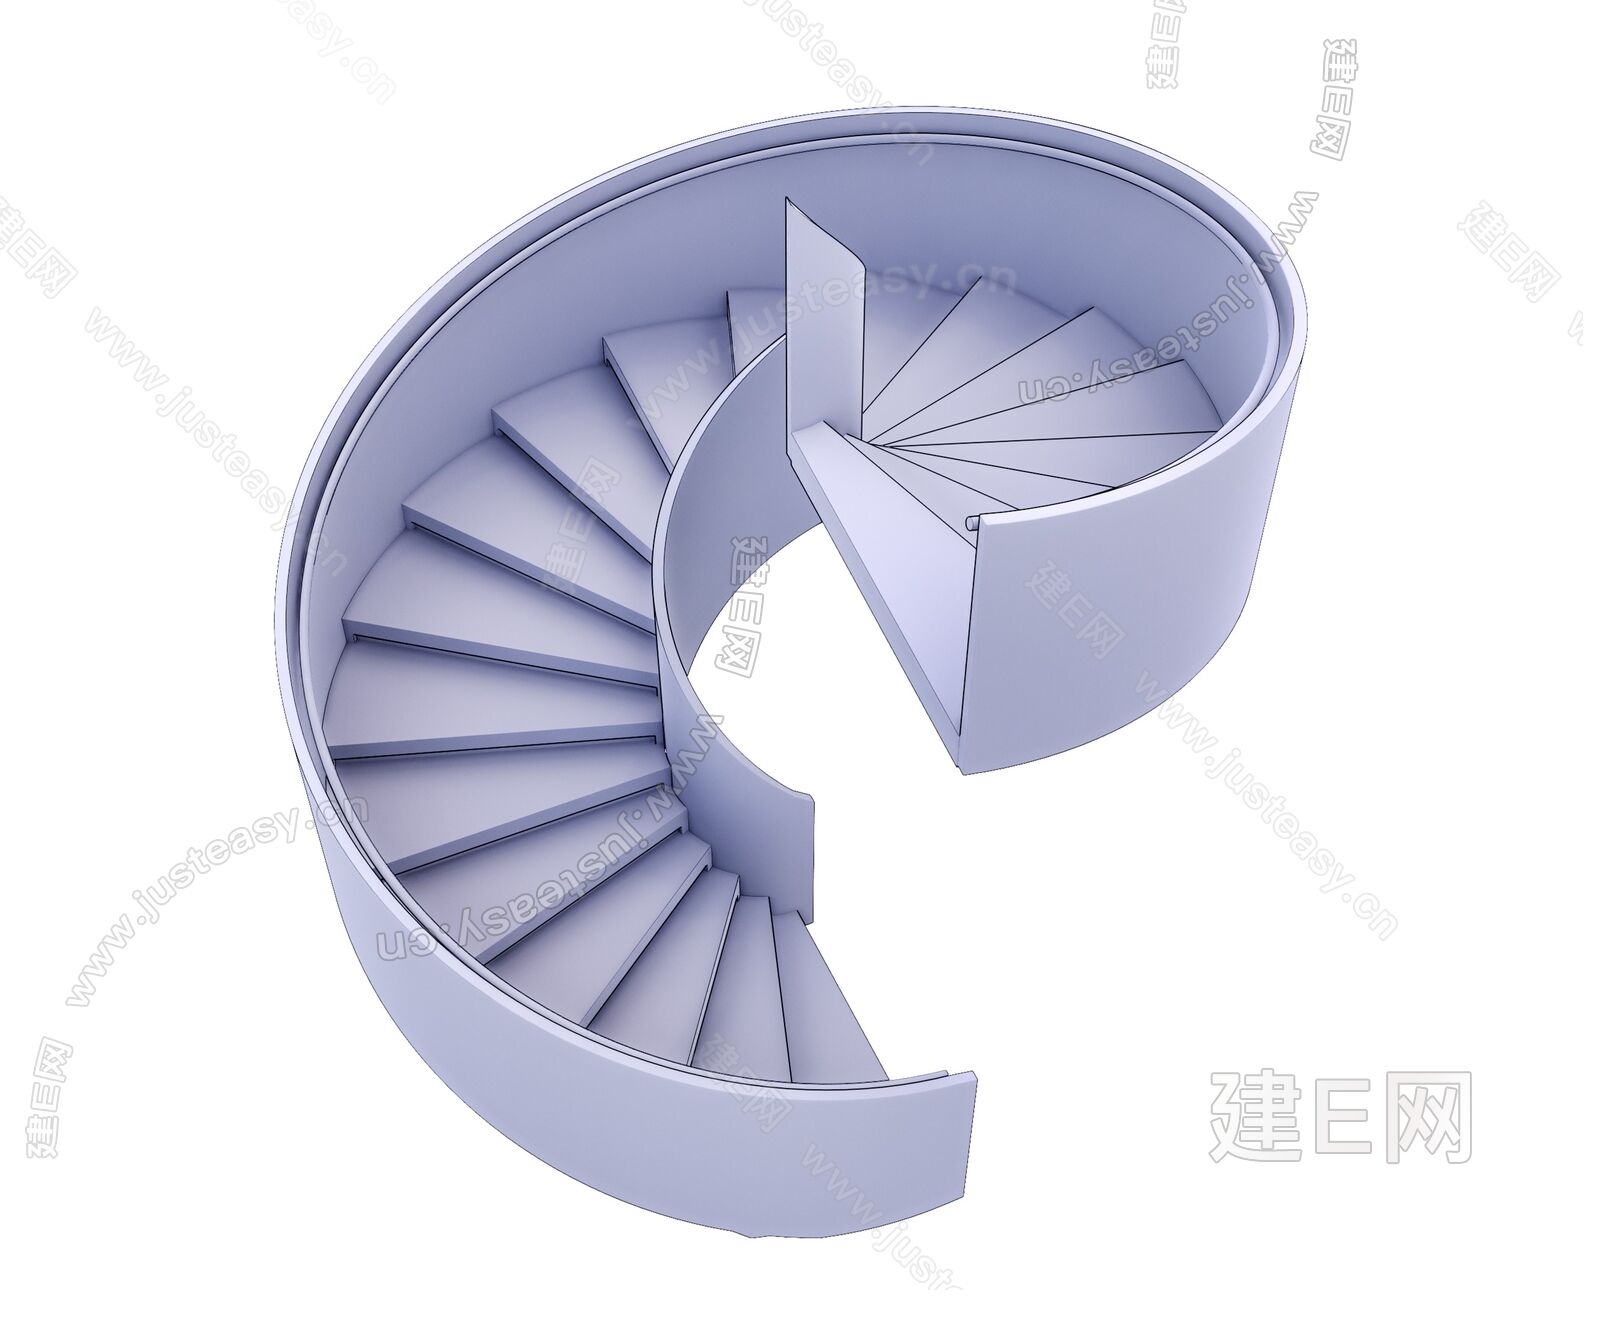 UG建模这种螺旋楼梯的踏步线条是怎么画出来的，求画图步骤和命令方法。-NX网-老叶UG软件安装包|NX升级包|NX2306|NX2212|NX2206|NX2007|NX1980|NX1953 ...